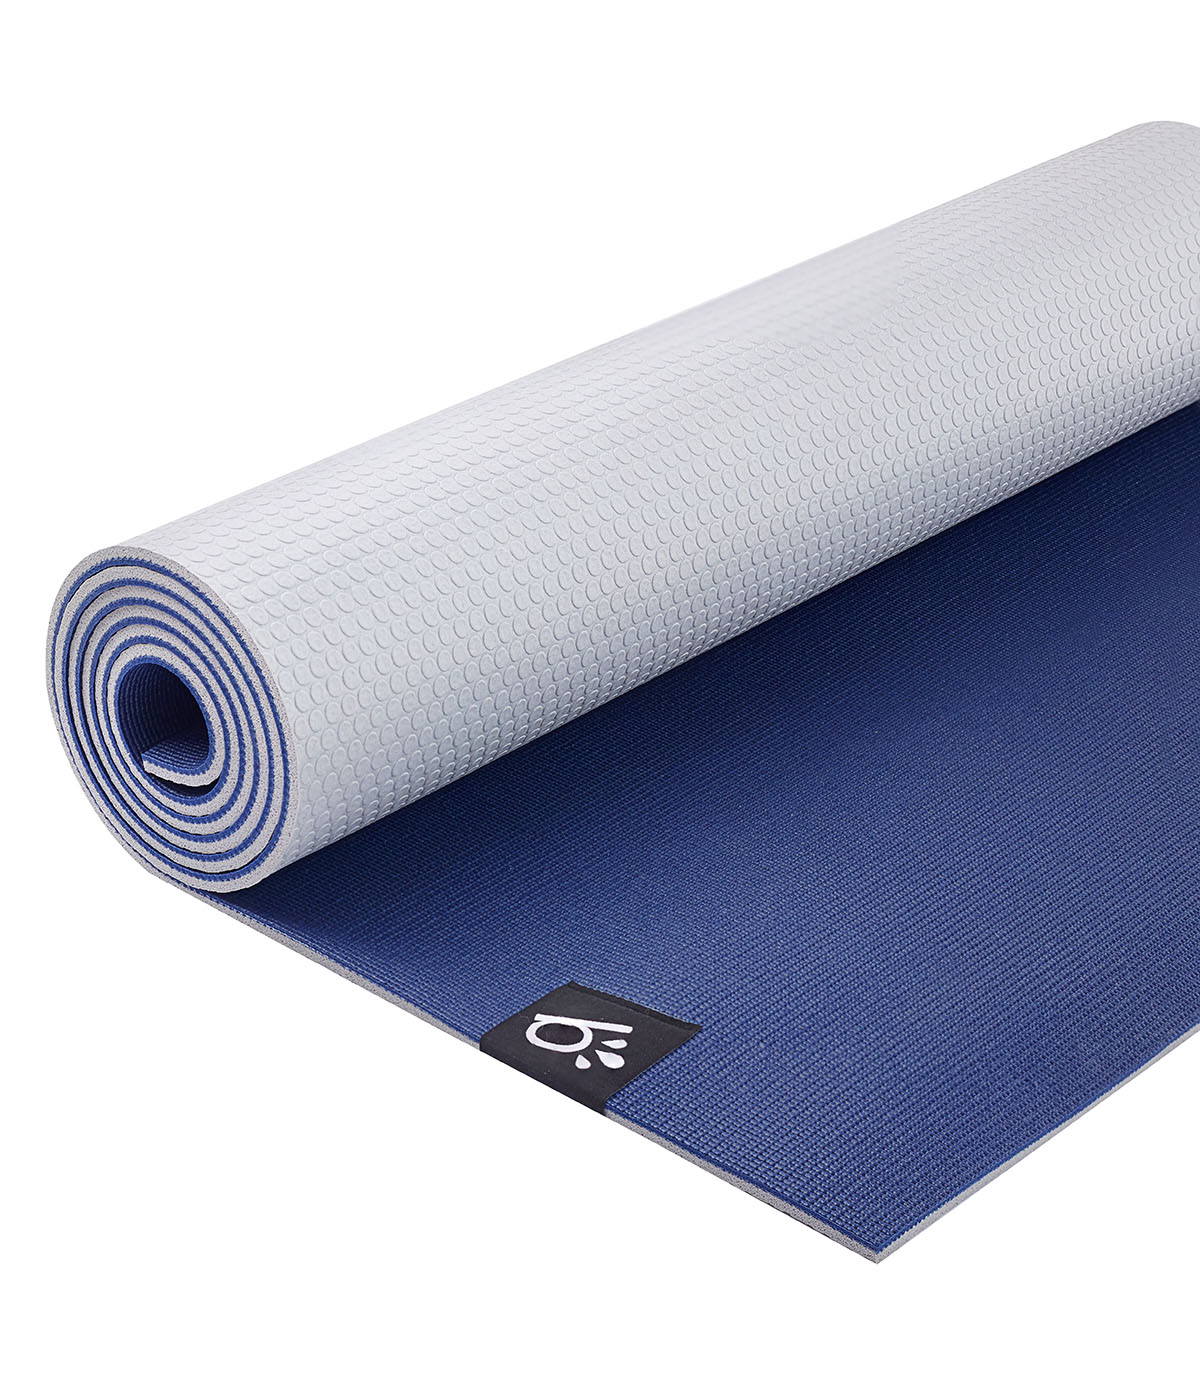 b ROCK yoga mat - High quality mat for Yoga Studio - Durable and